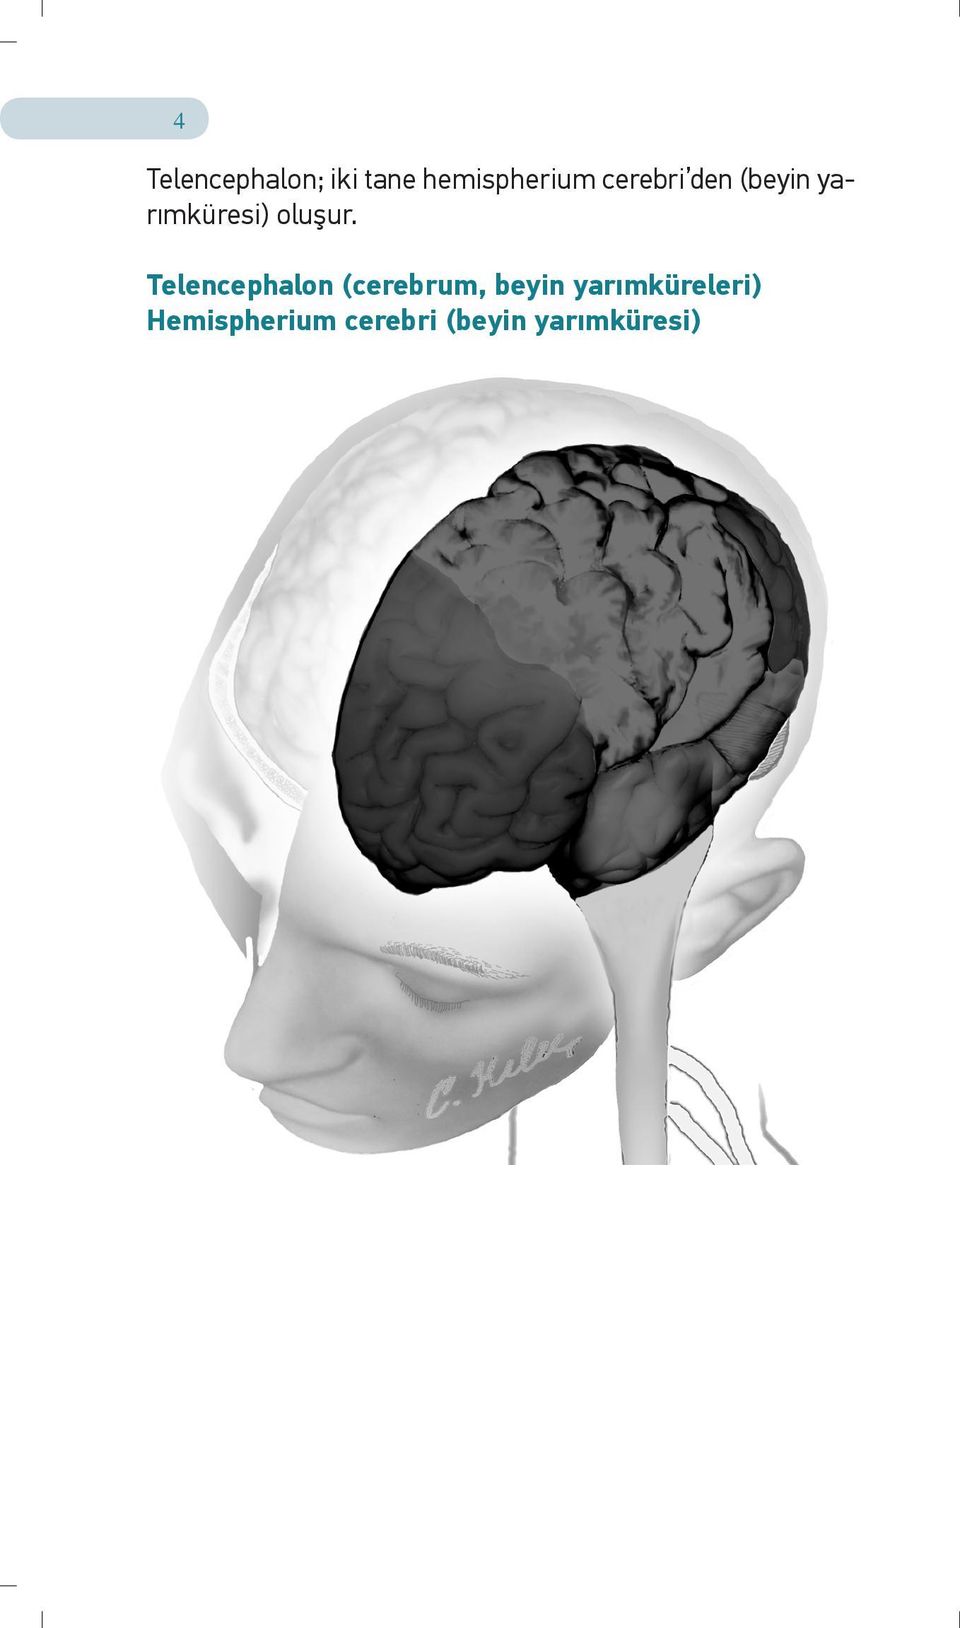 Telencephalon (cerebrum, beyin